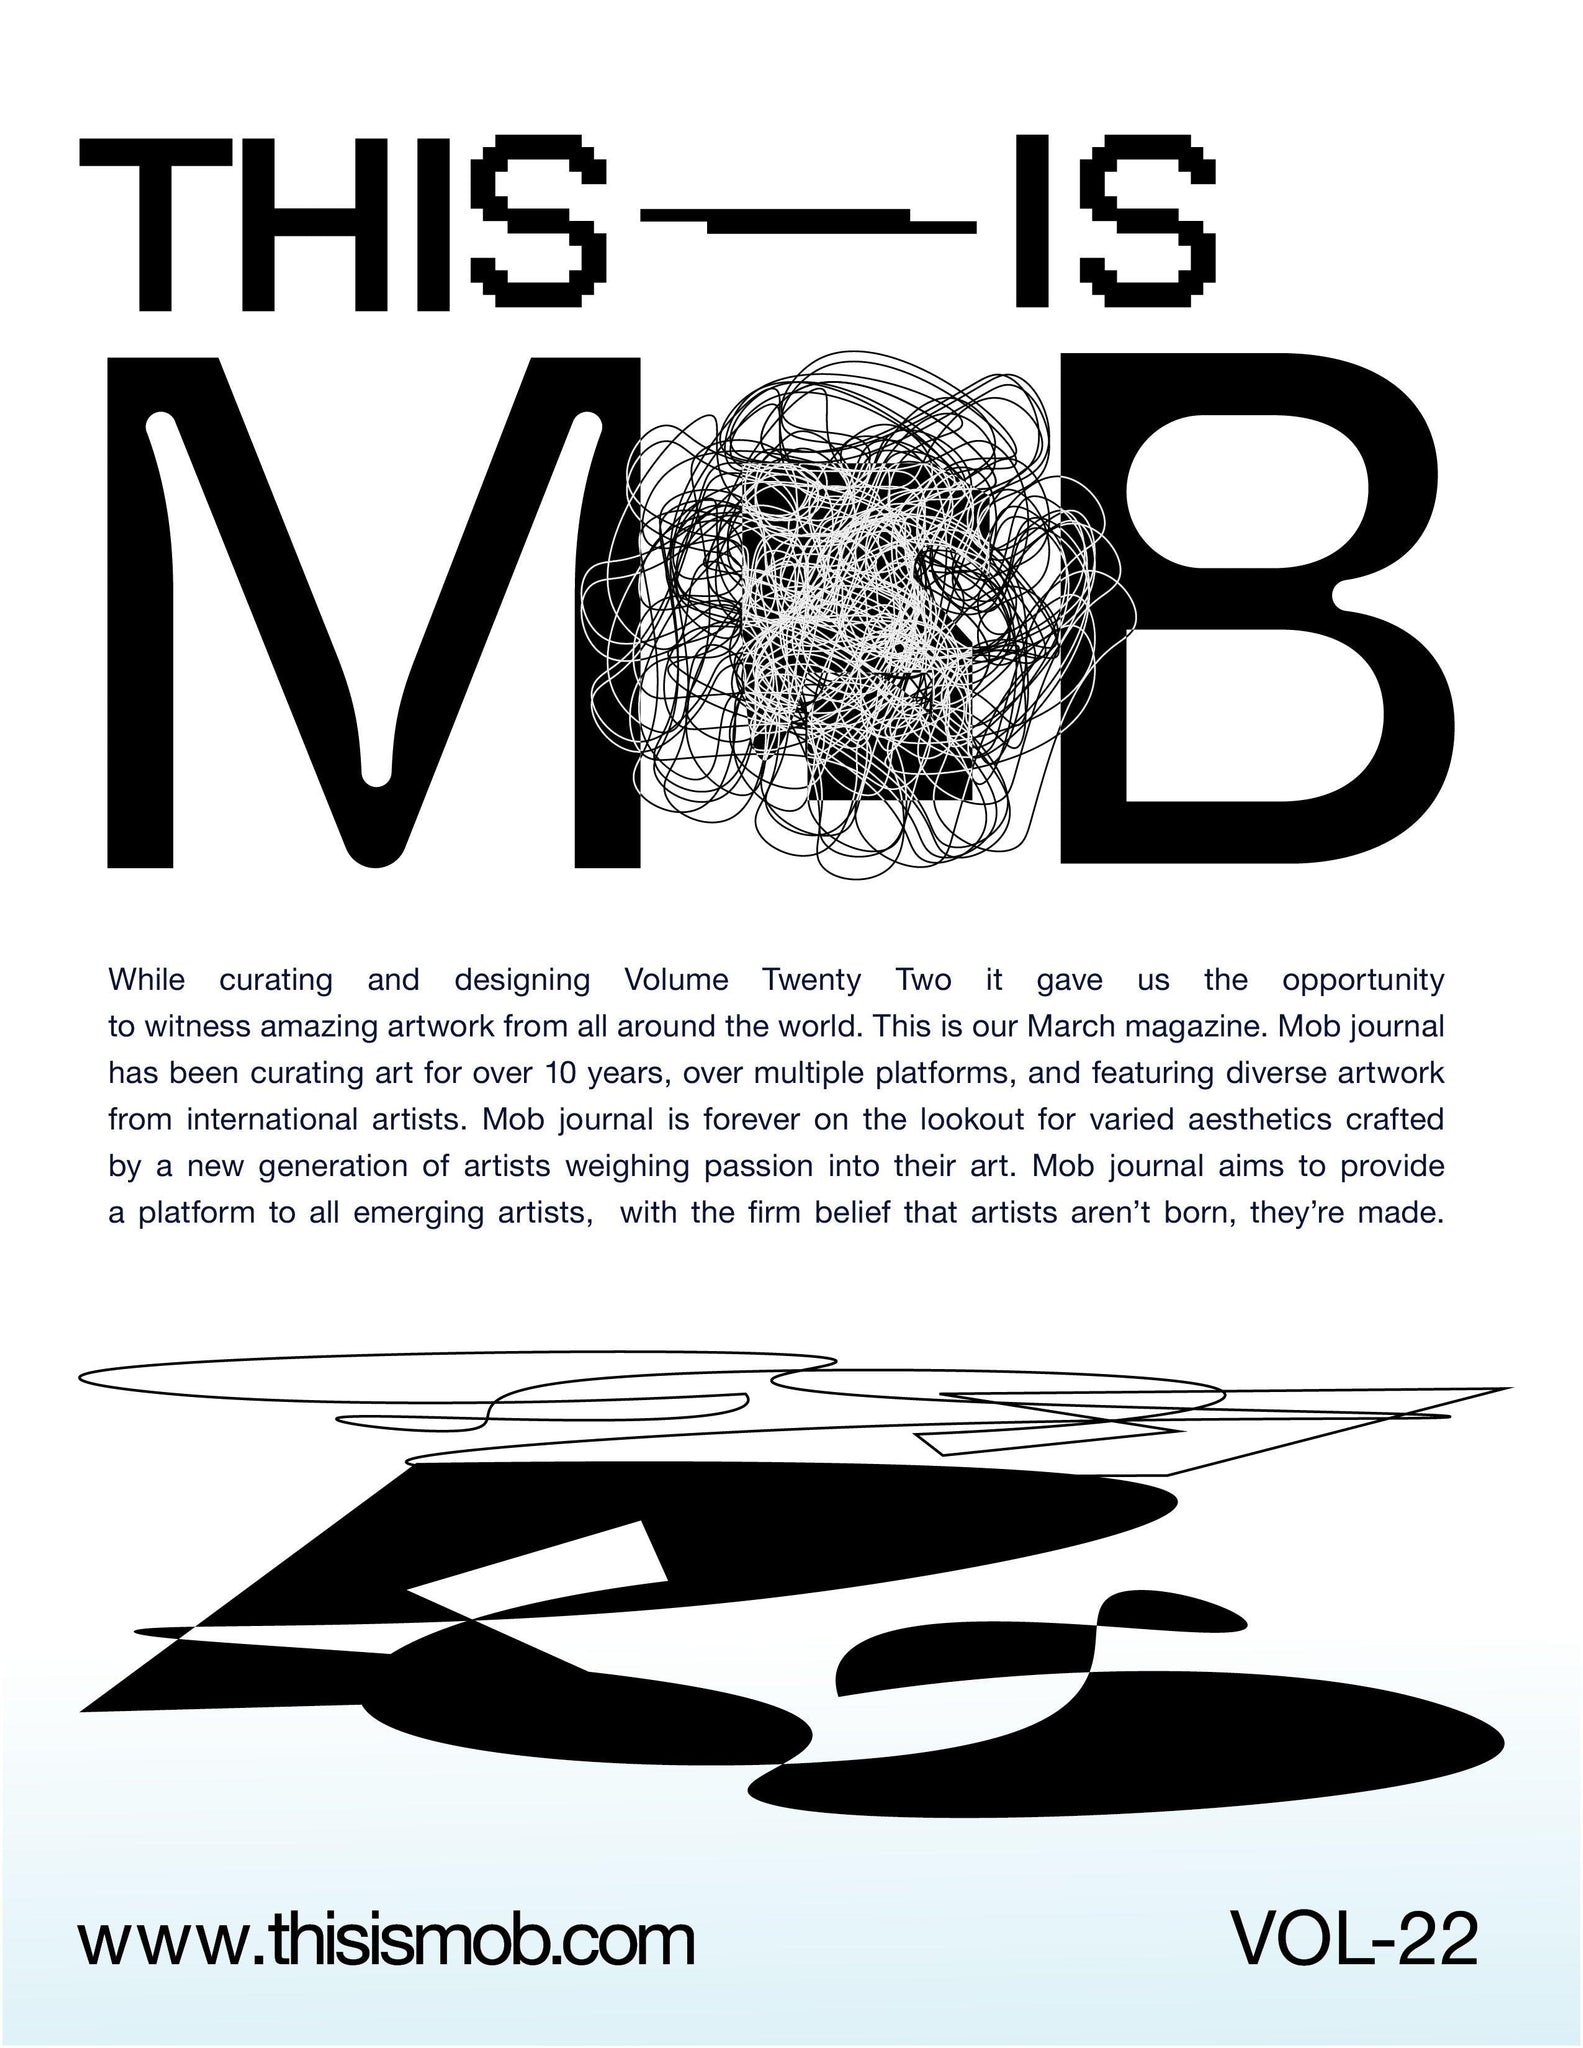 MOB JOURNAL | VOLUME TWENTY TWO | ISSUE #47 - Mob Journal